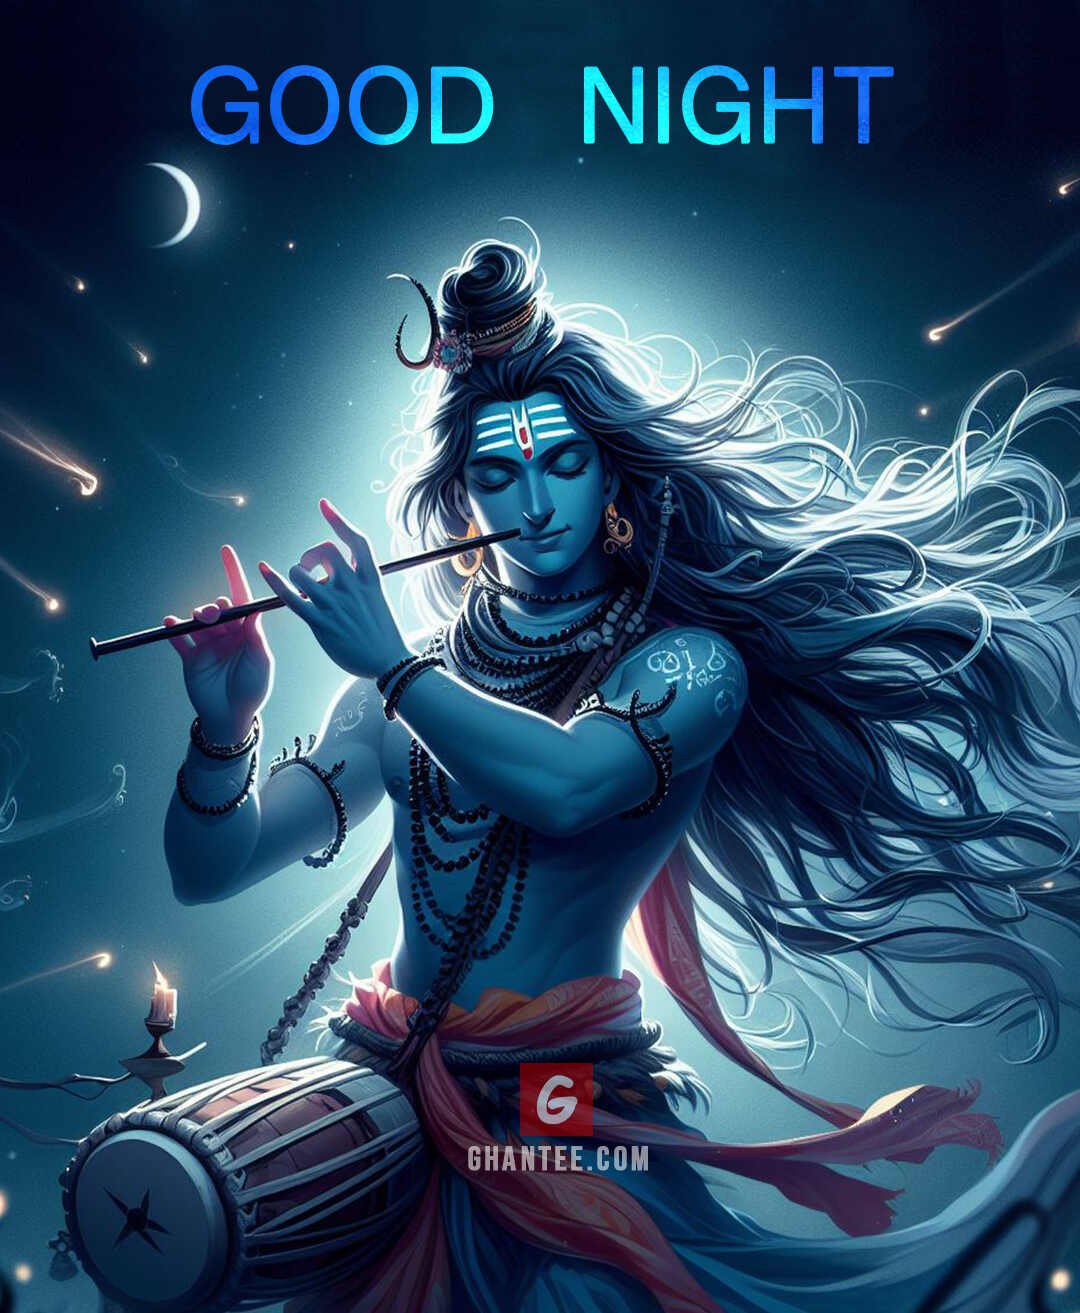 Shiva wishes you a good night